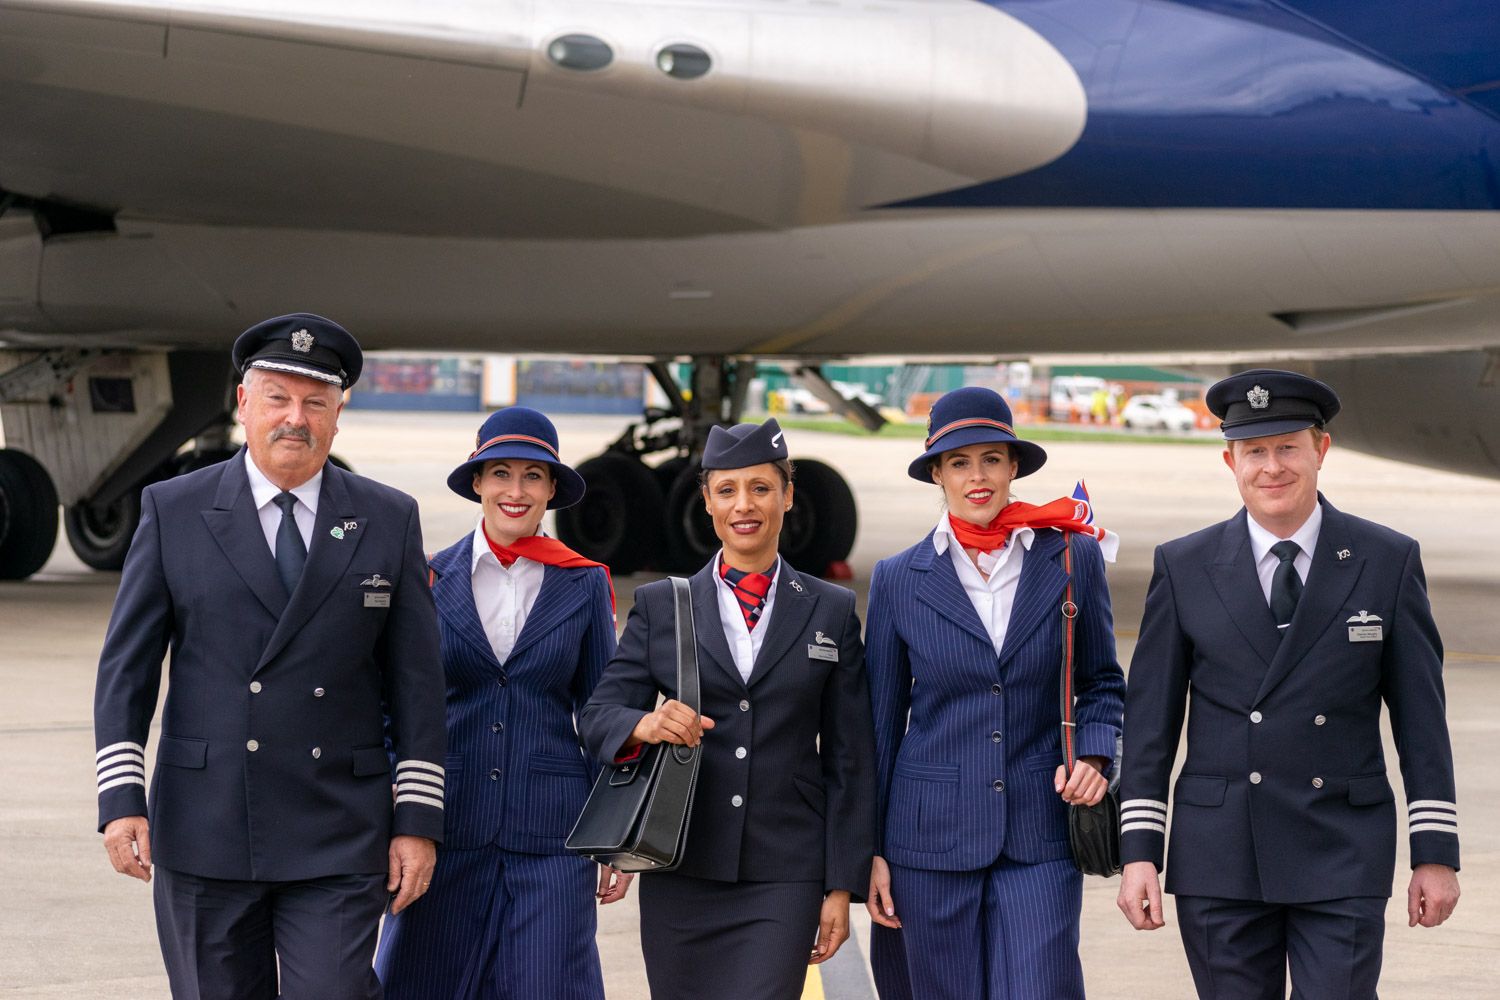 Multiple British Airways crew members.